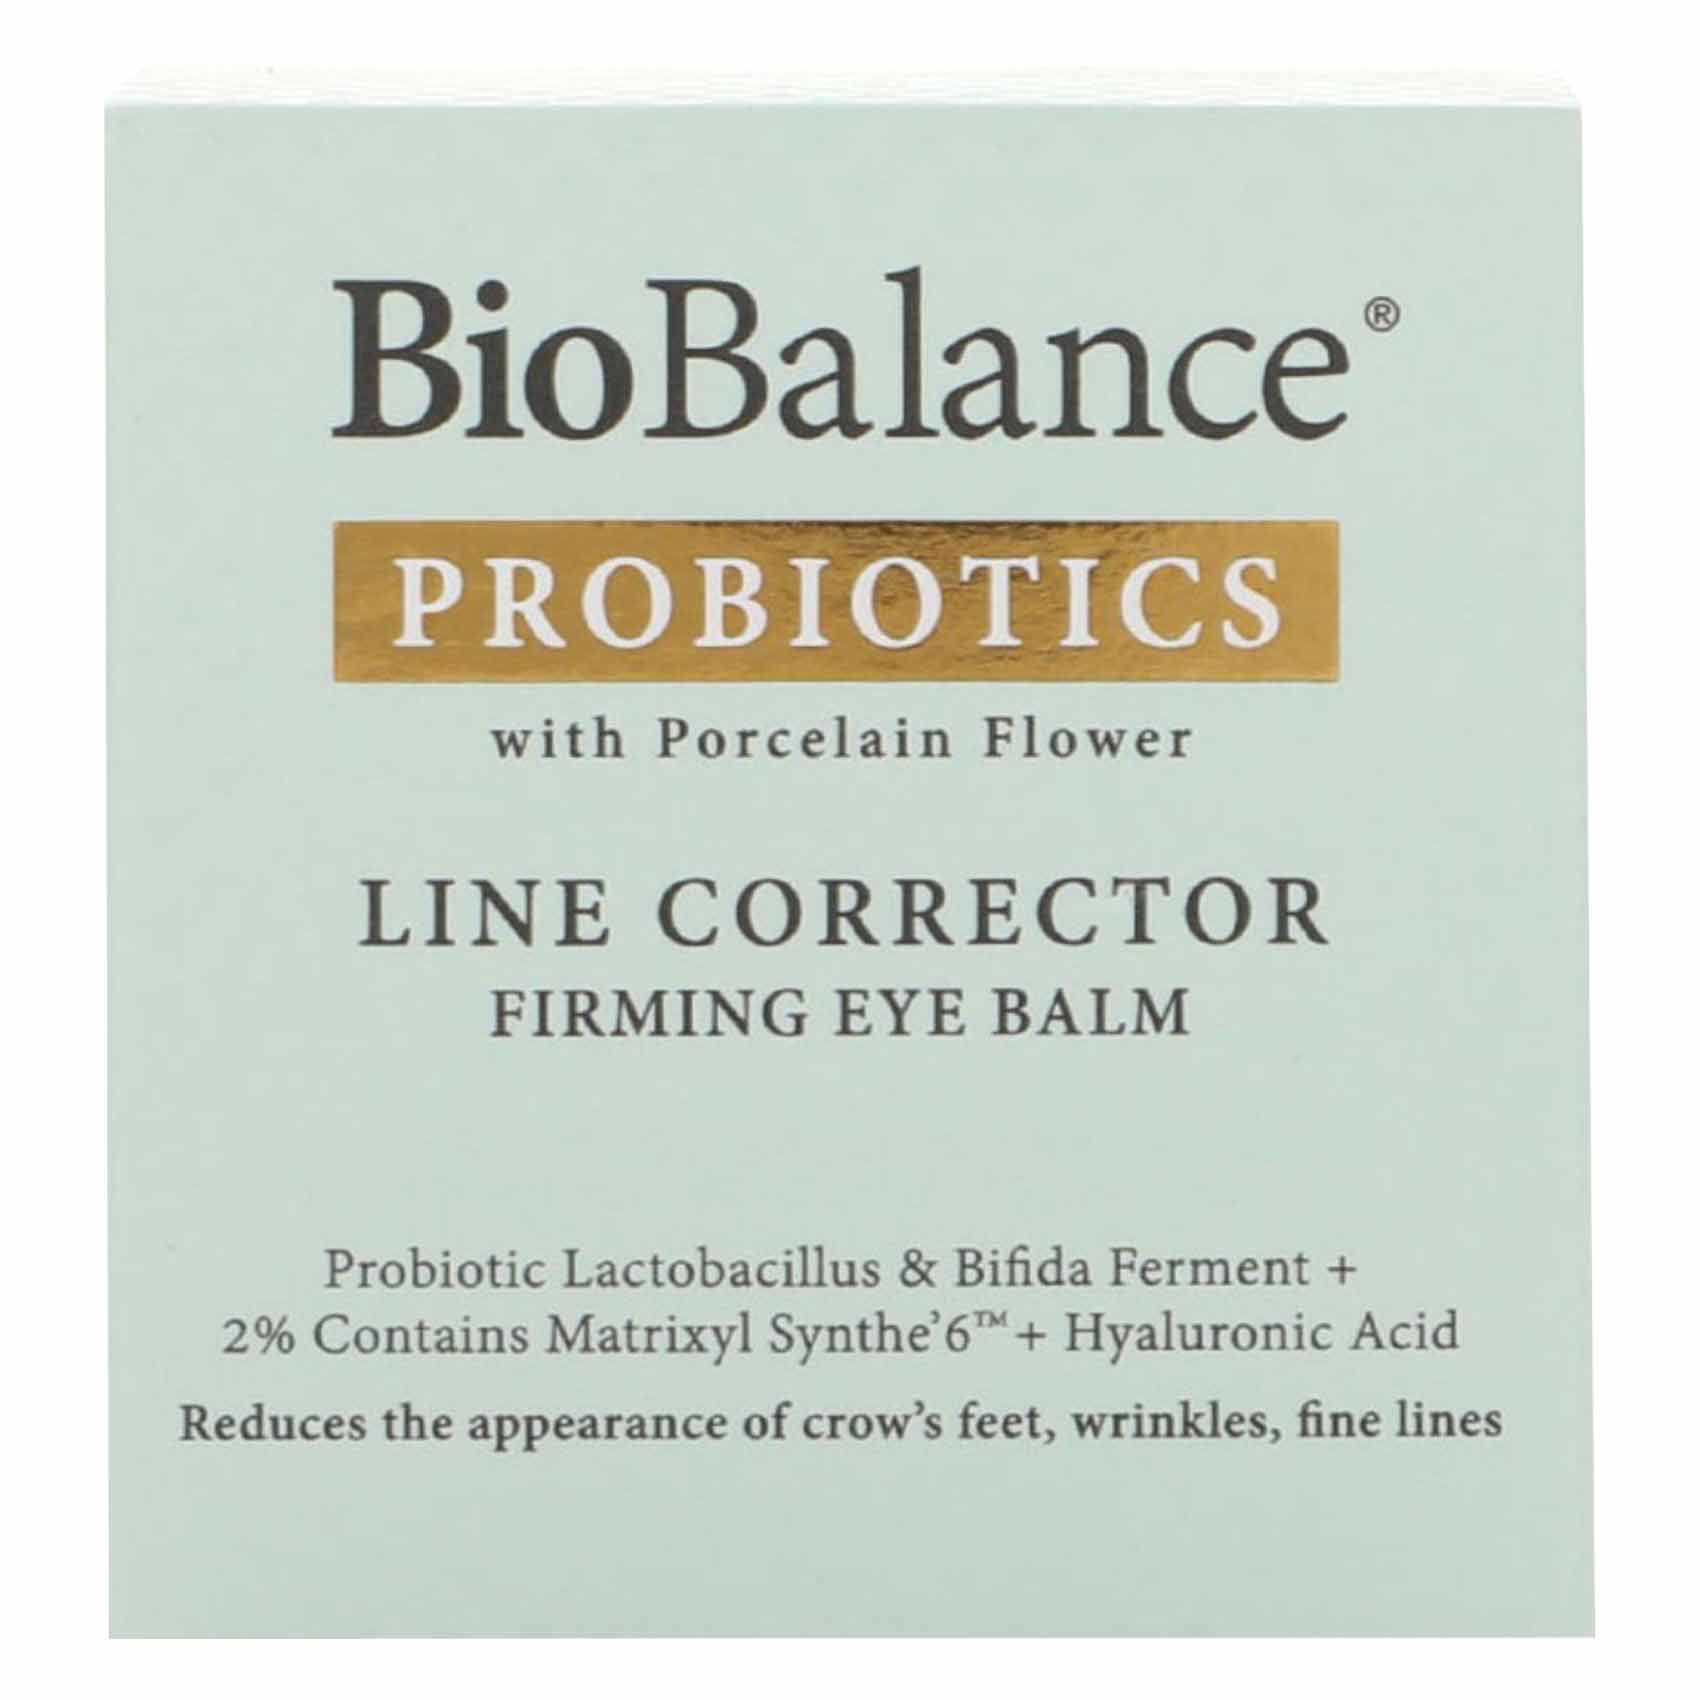 Bio Balance Probiotic Line Corrector Firming Eye Balm 15ml